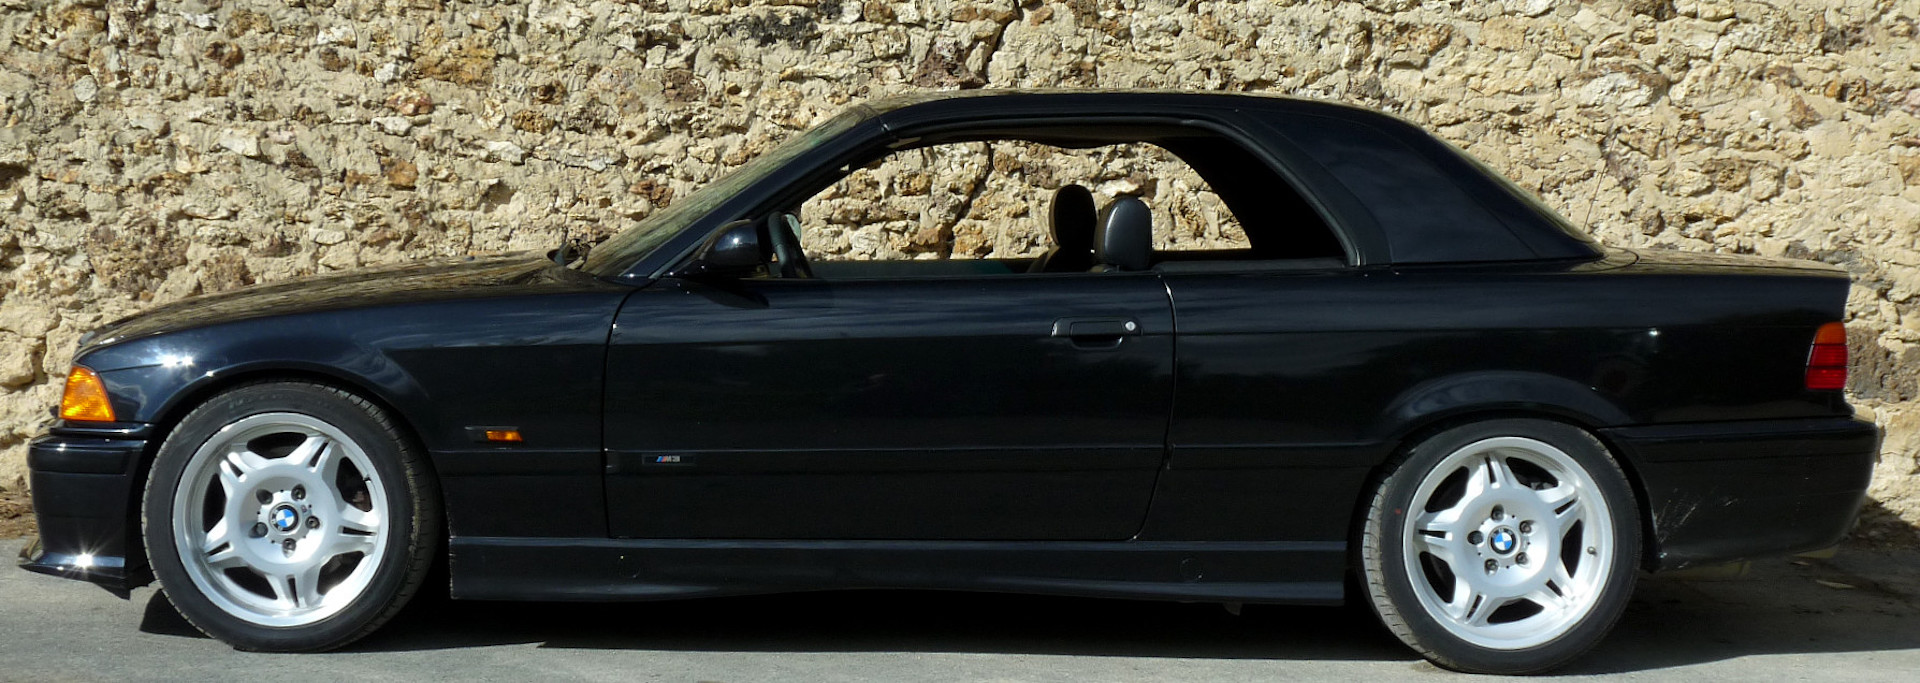 BMW M3 hard top